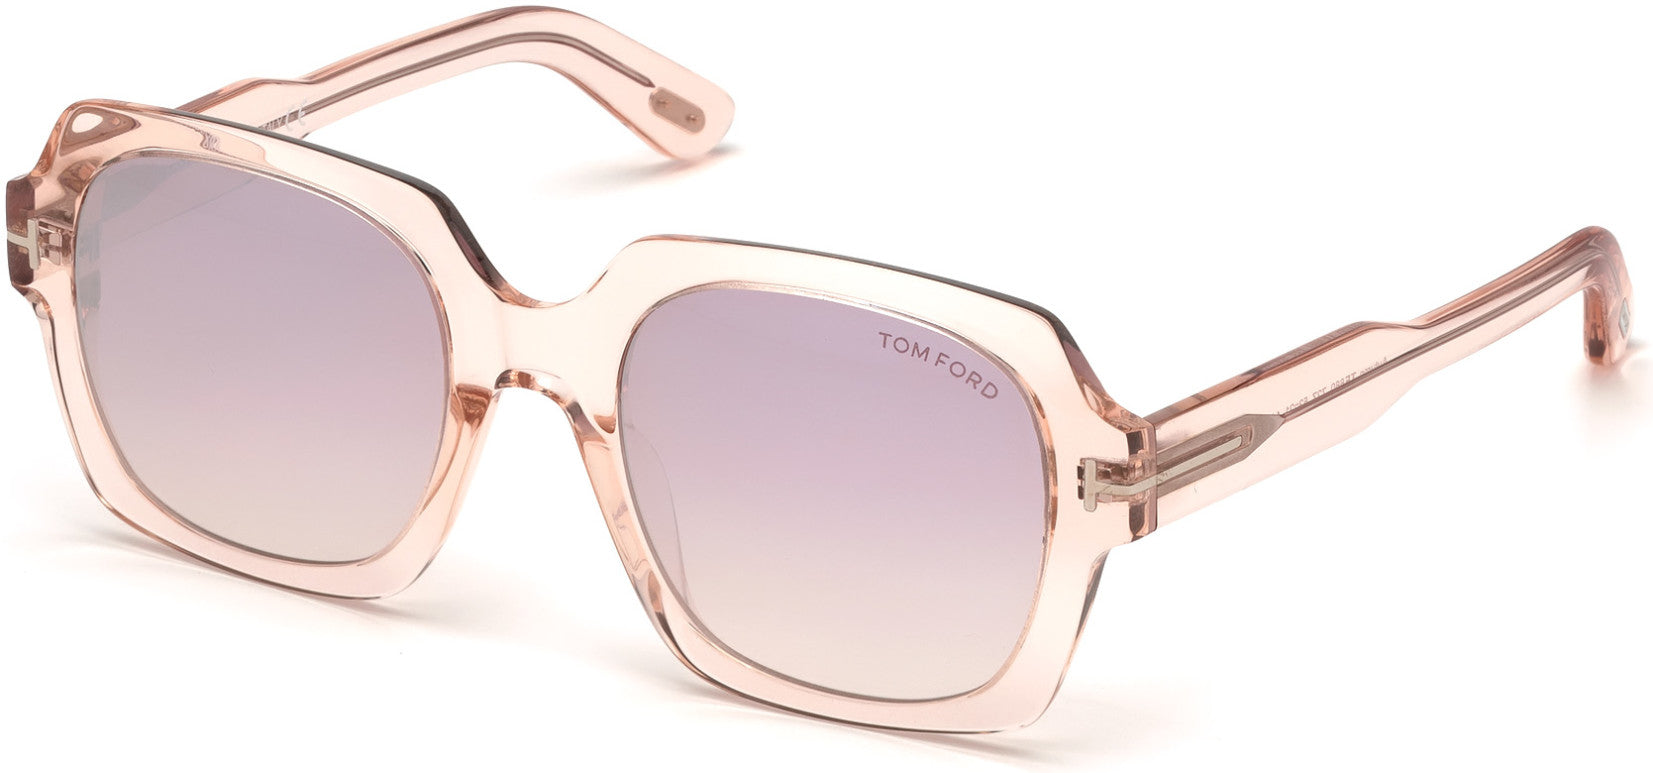 Tom Ford FT0660 Autumn Geometric Sunglasses 72Z-72Z - Shiny Transparent Pink/ Gradient Wine Pearlized Lenses